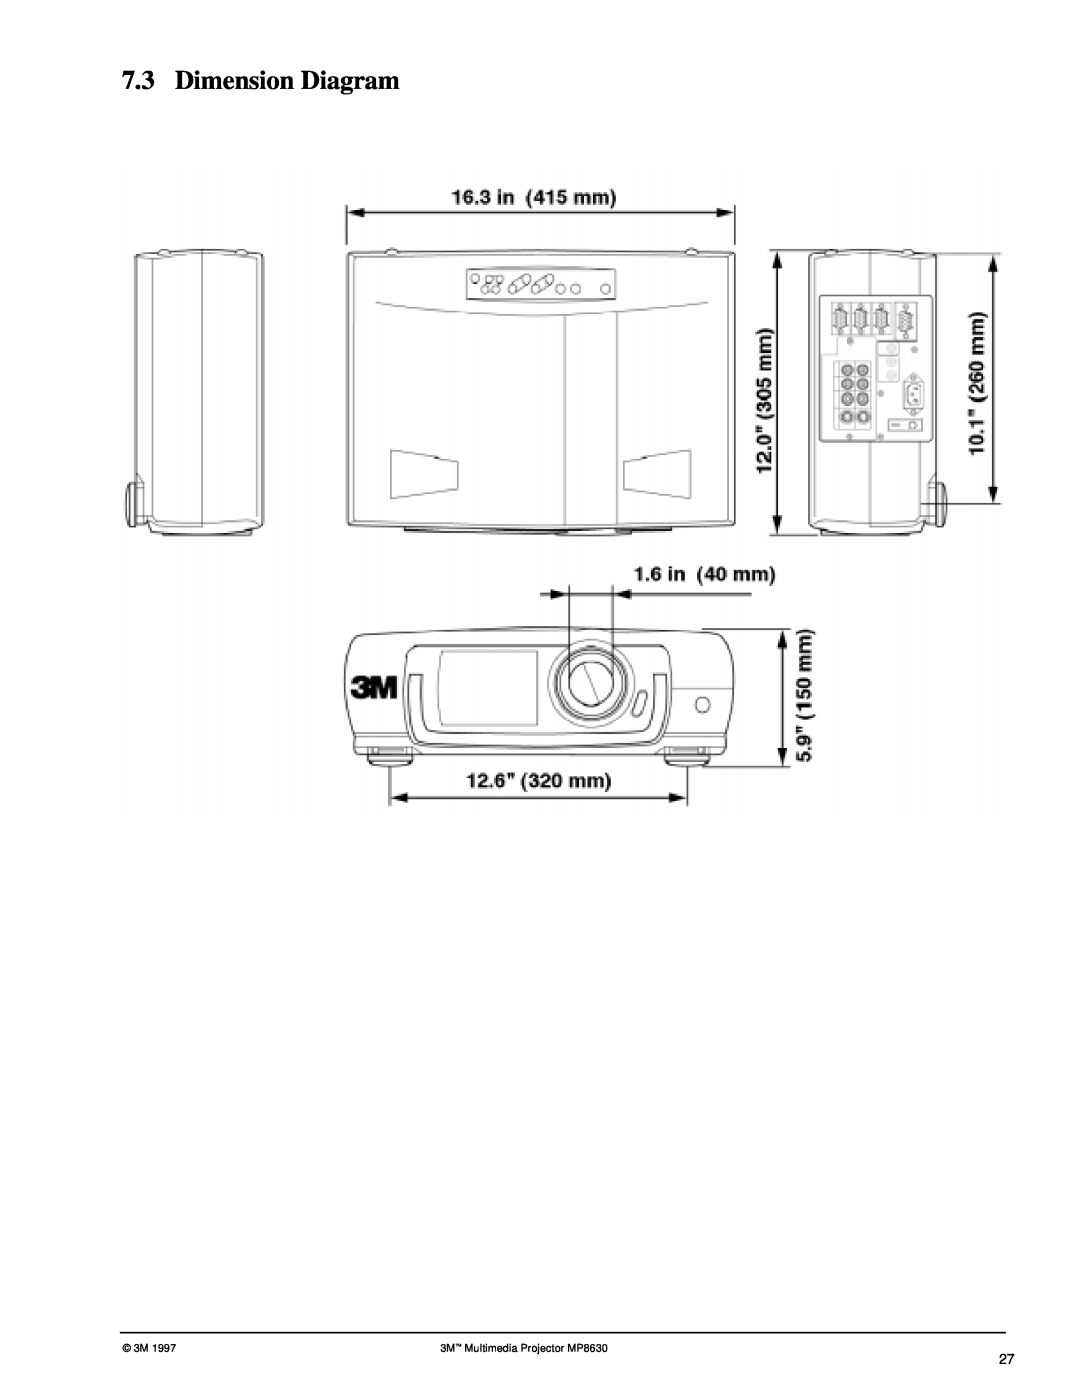 3M manual Dimension Diagram, 3M Multimedia Projector MP8630 